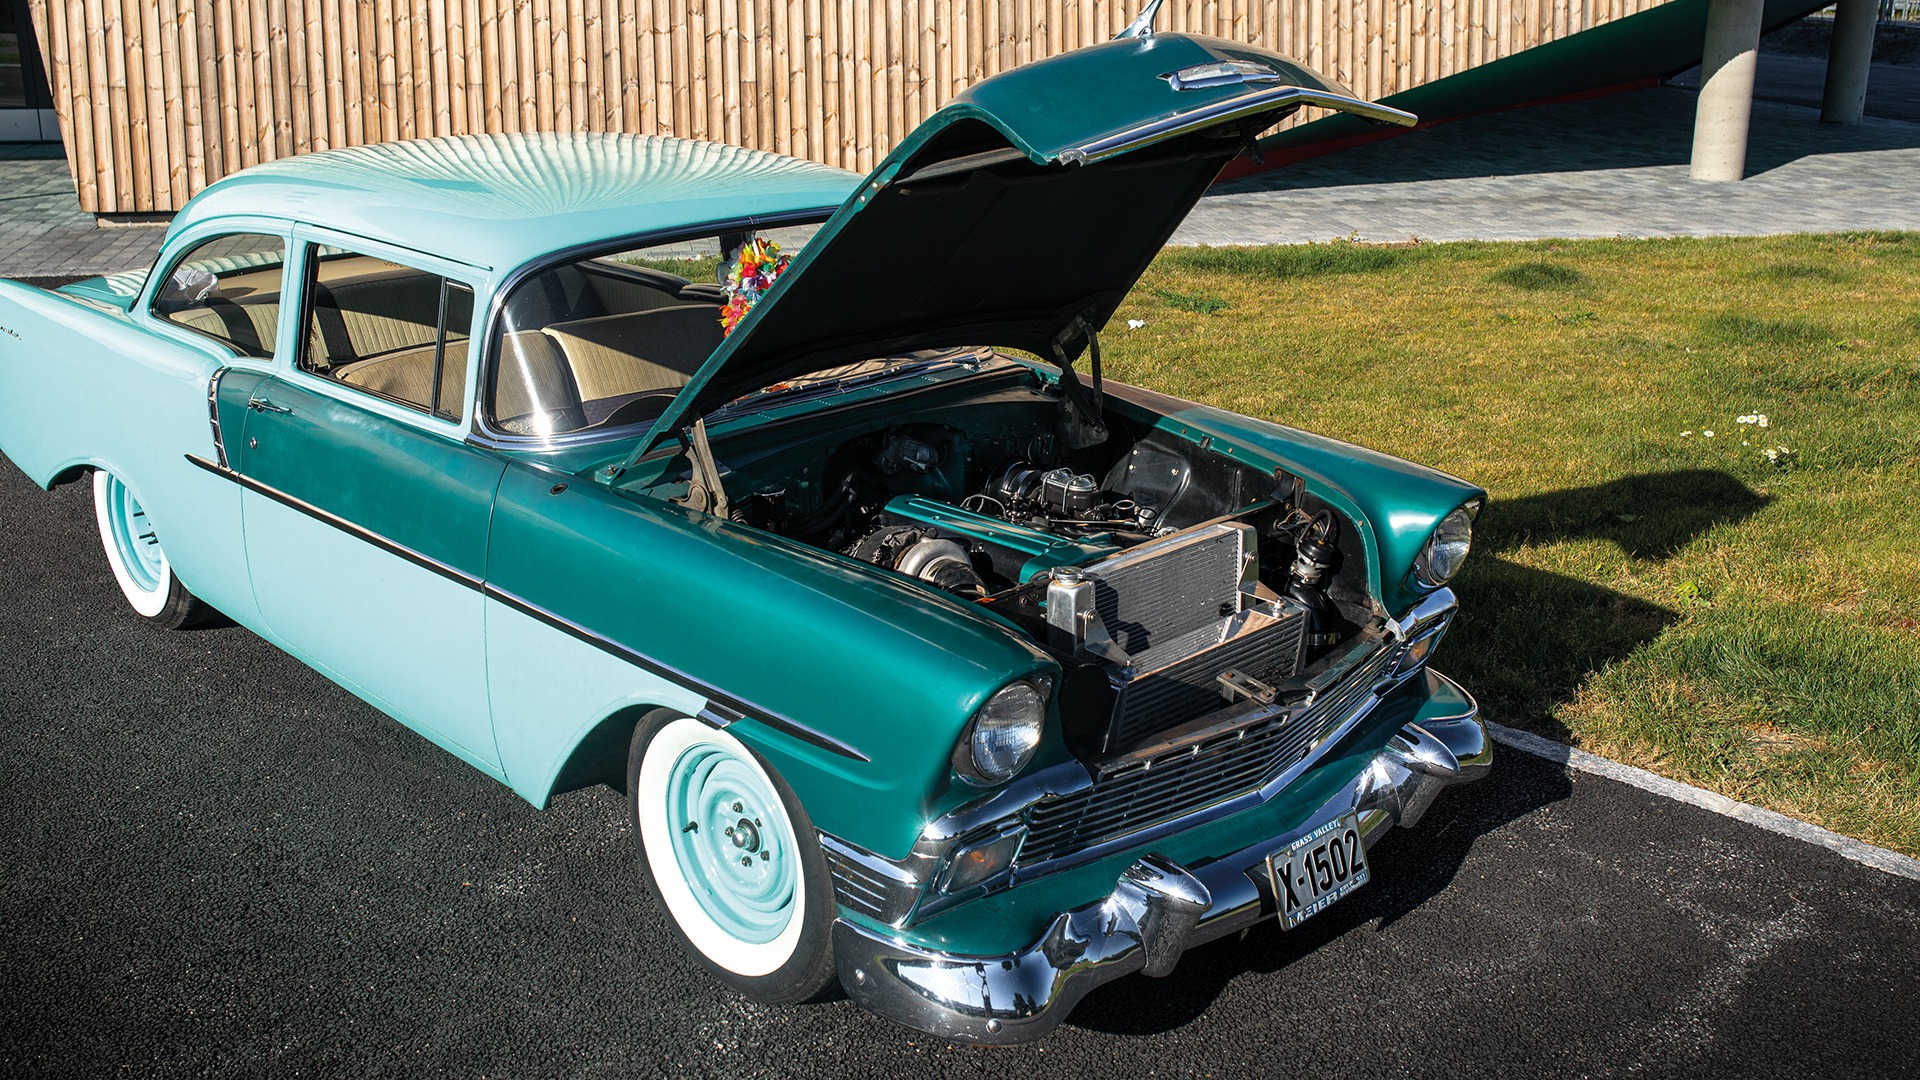 Tommys 1956 Chevrolet er annerledes, og har snart 1,5 millioner visninger på Instagram.